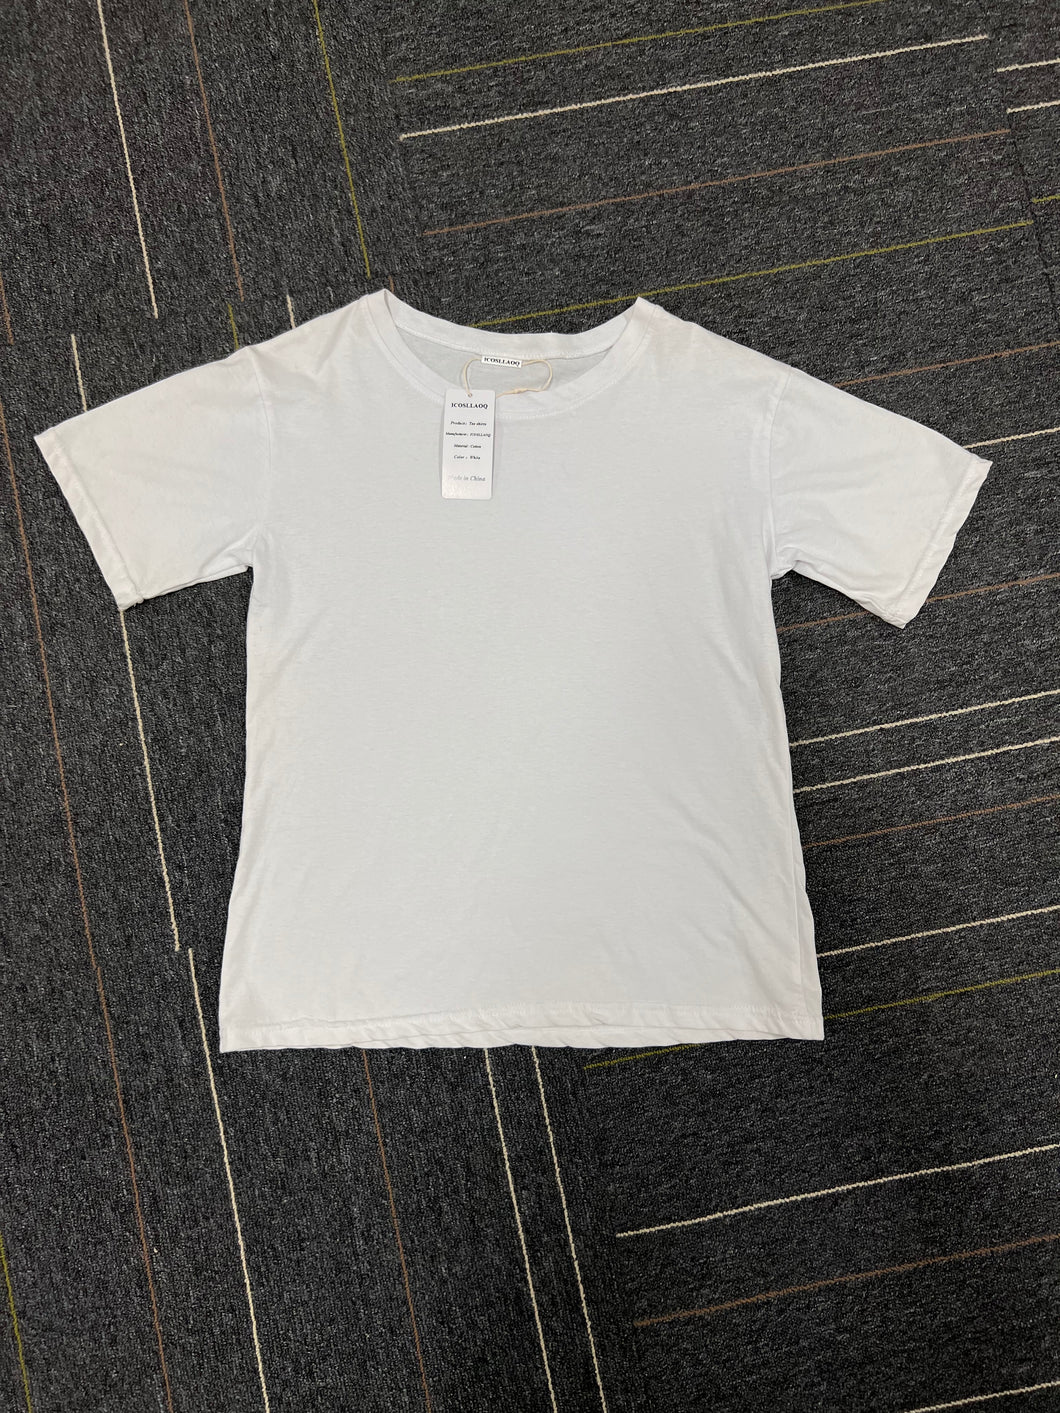 ICOSLLAOQ Tee shirts,Athletic Men's Cotton Performance Short Sleeve T-Shirt, Men's Crewneck T-Shirts, Soft Modern Fitted Basic Tees